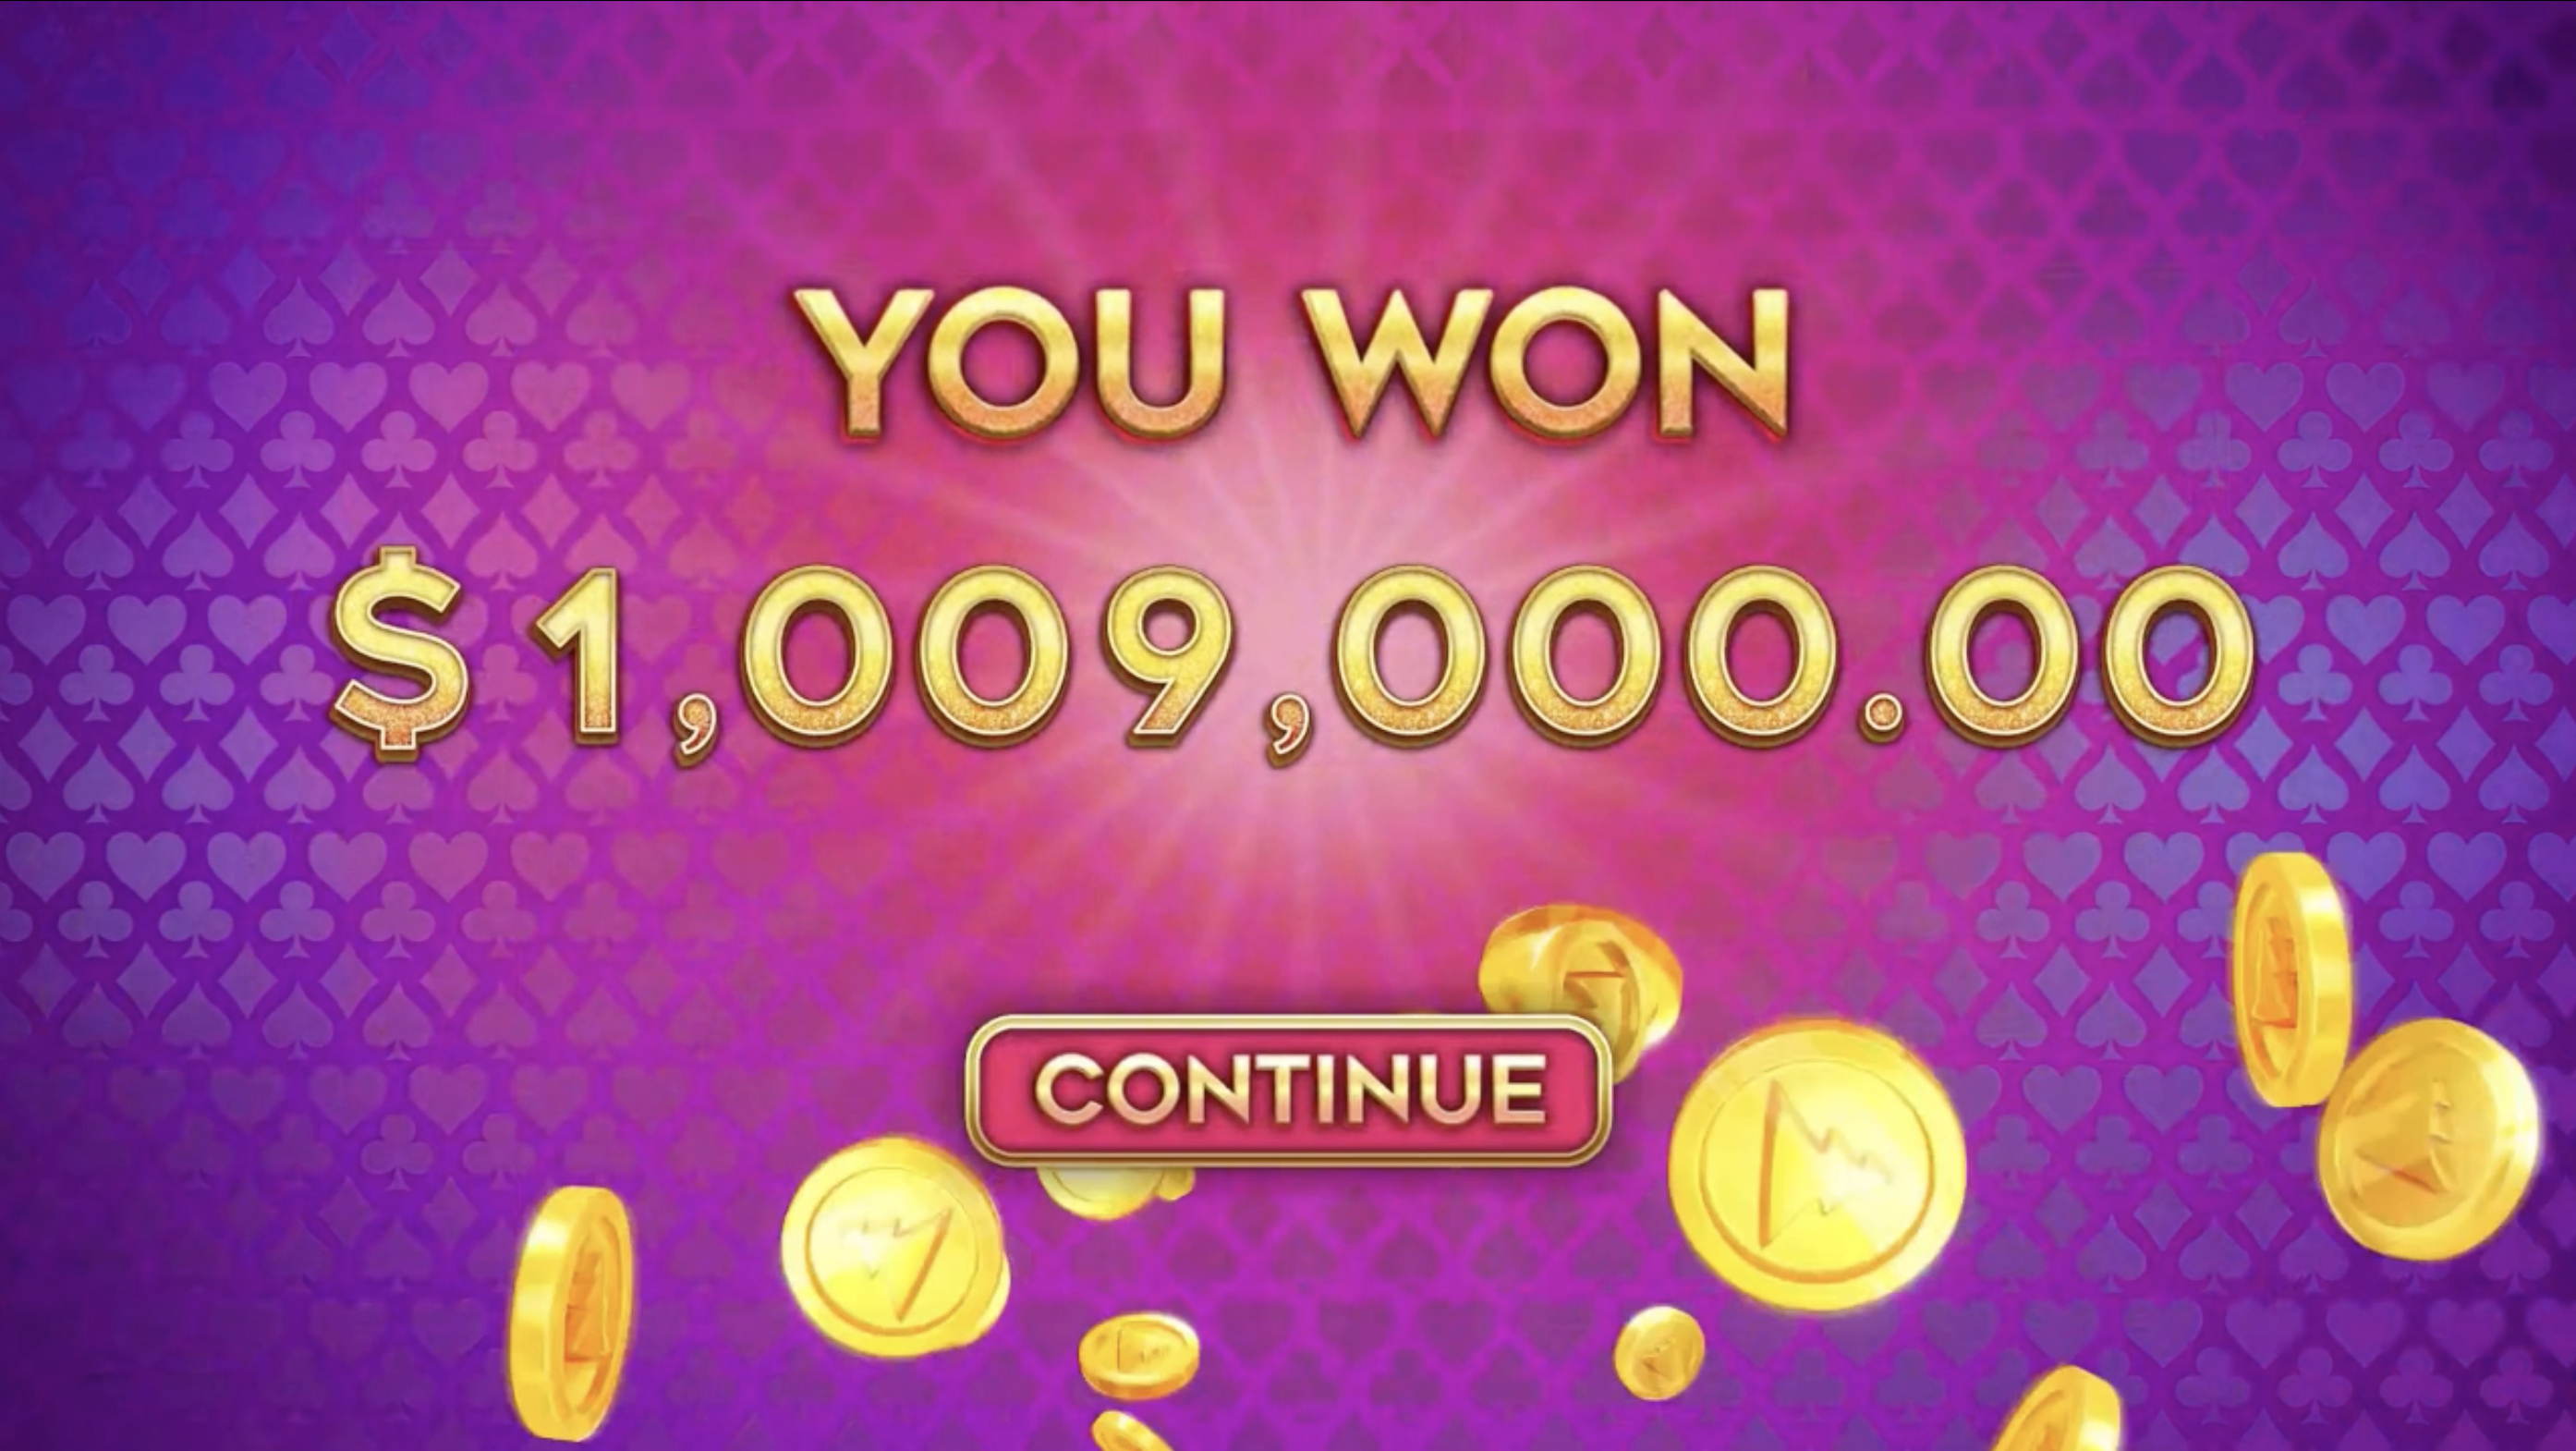 Ganancia de suerte con mega dados de $1 millón: Has ganado $1,009,000